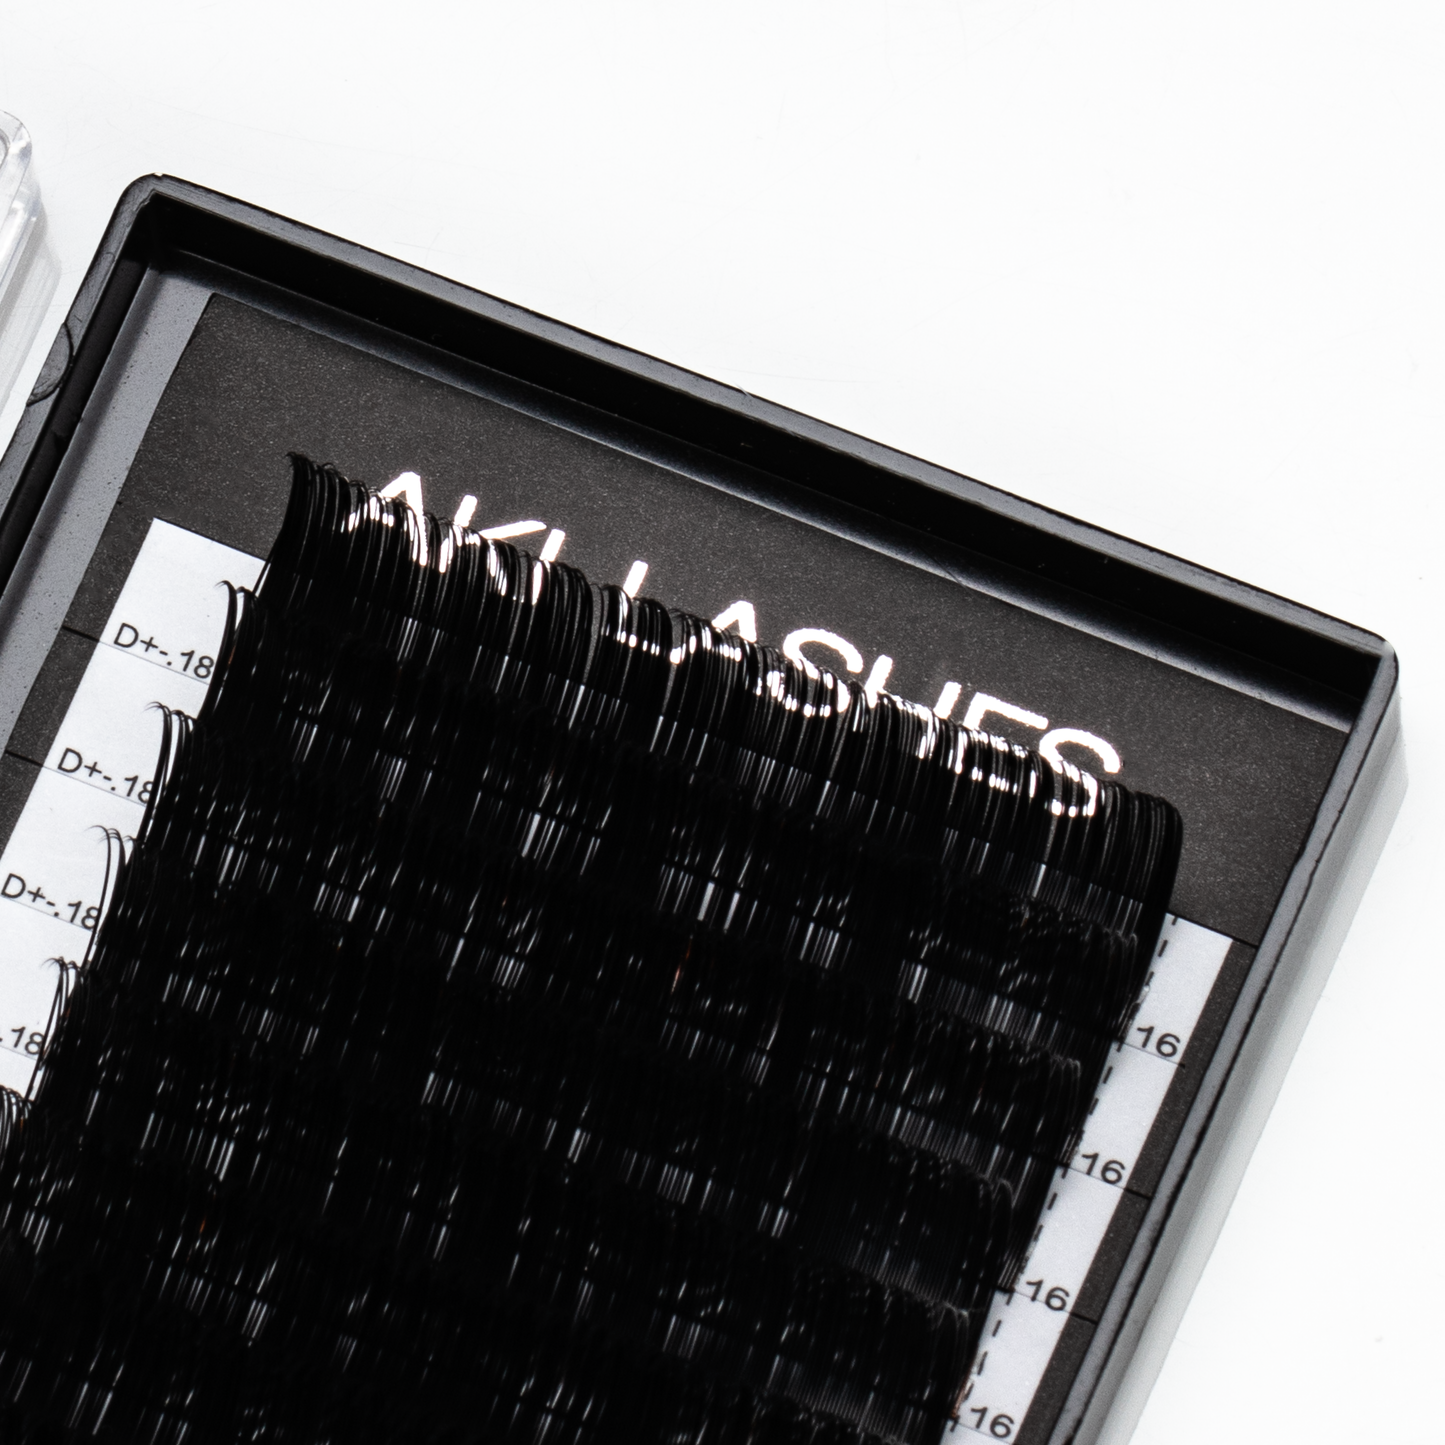 0.18 Classic Lashes Single Length - Aki Lashes